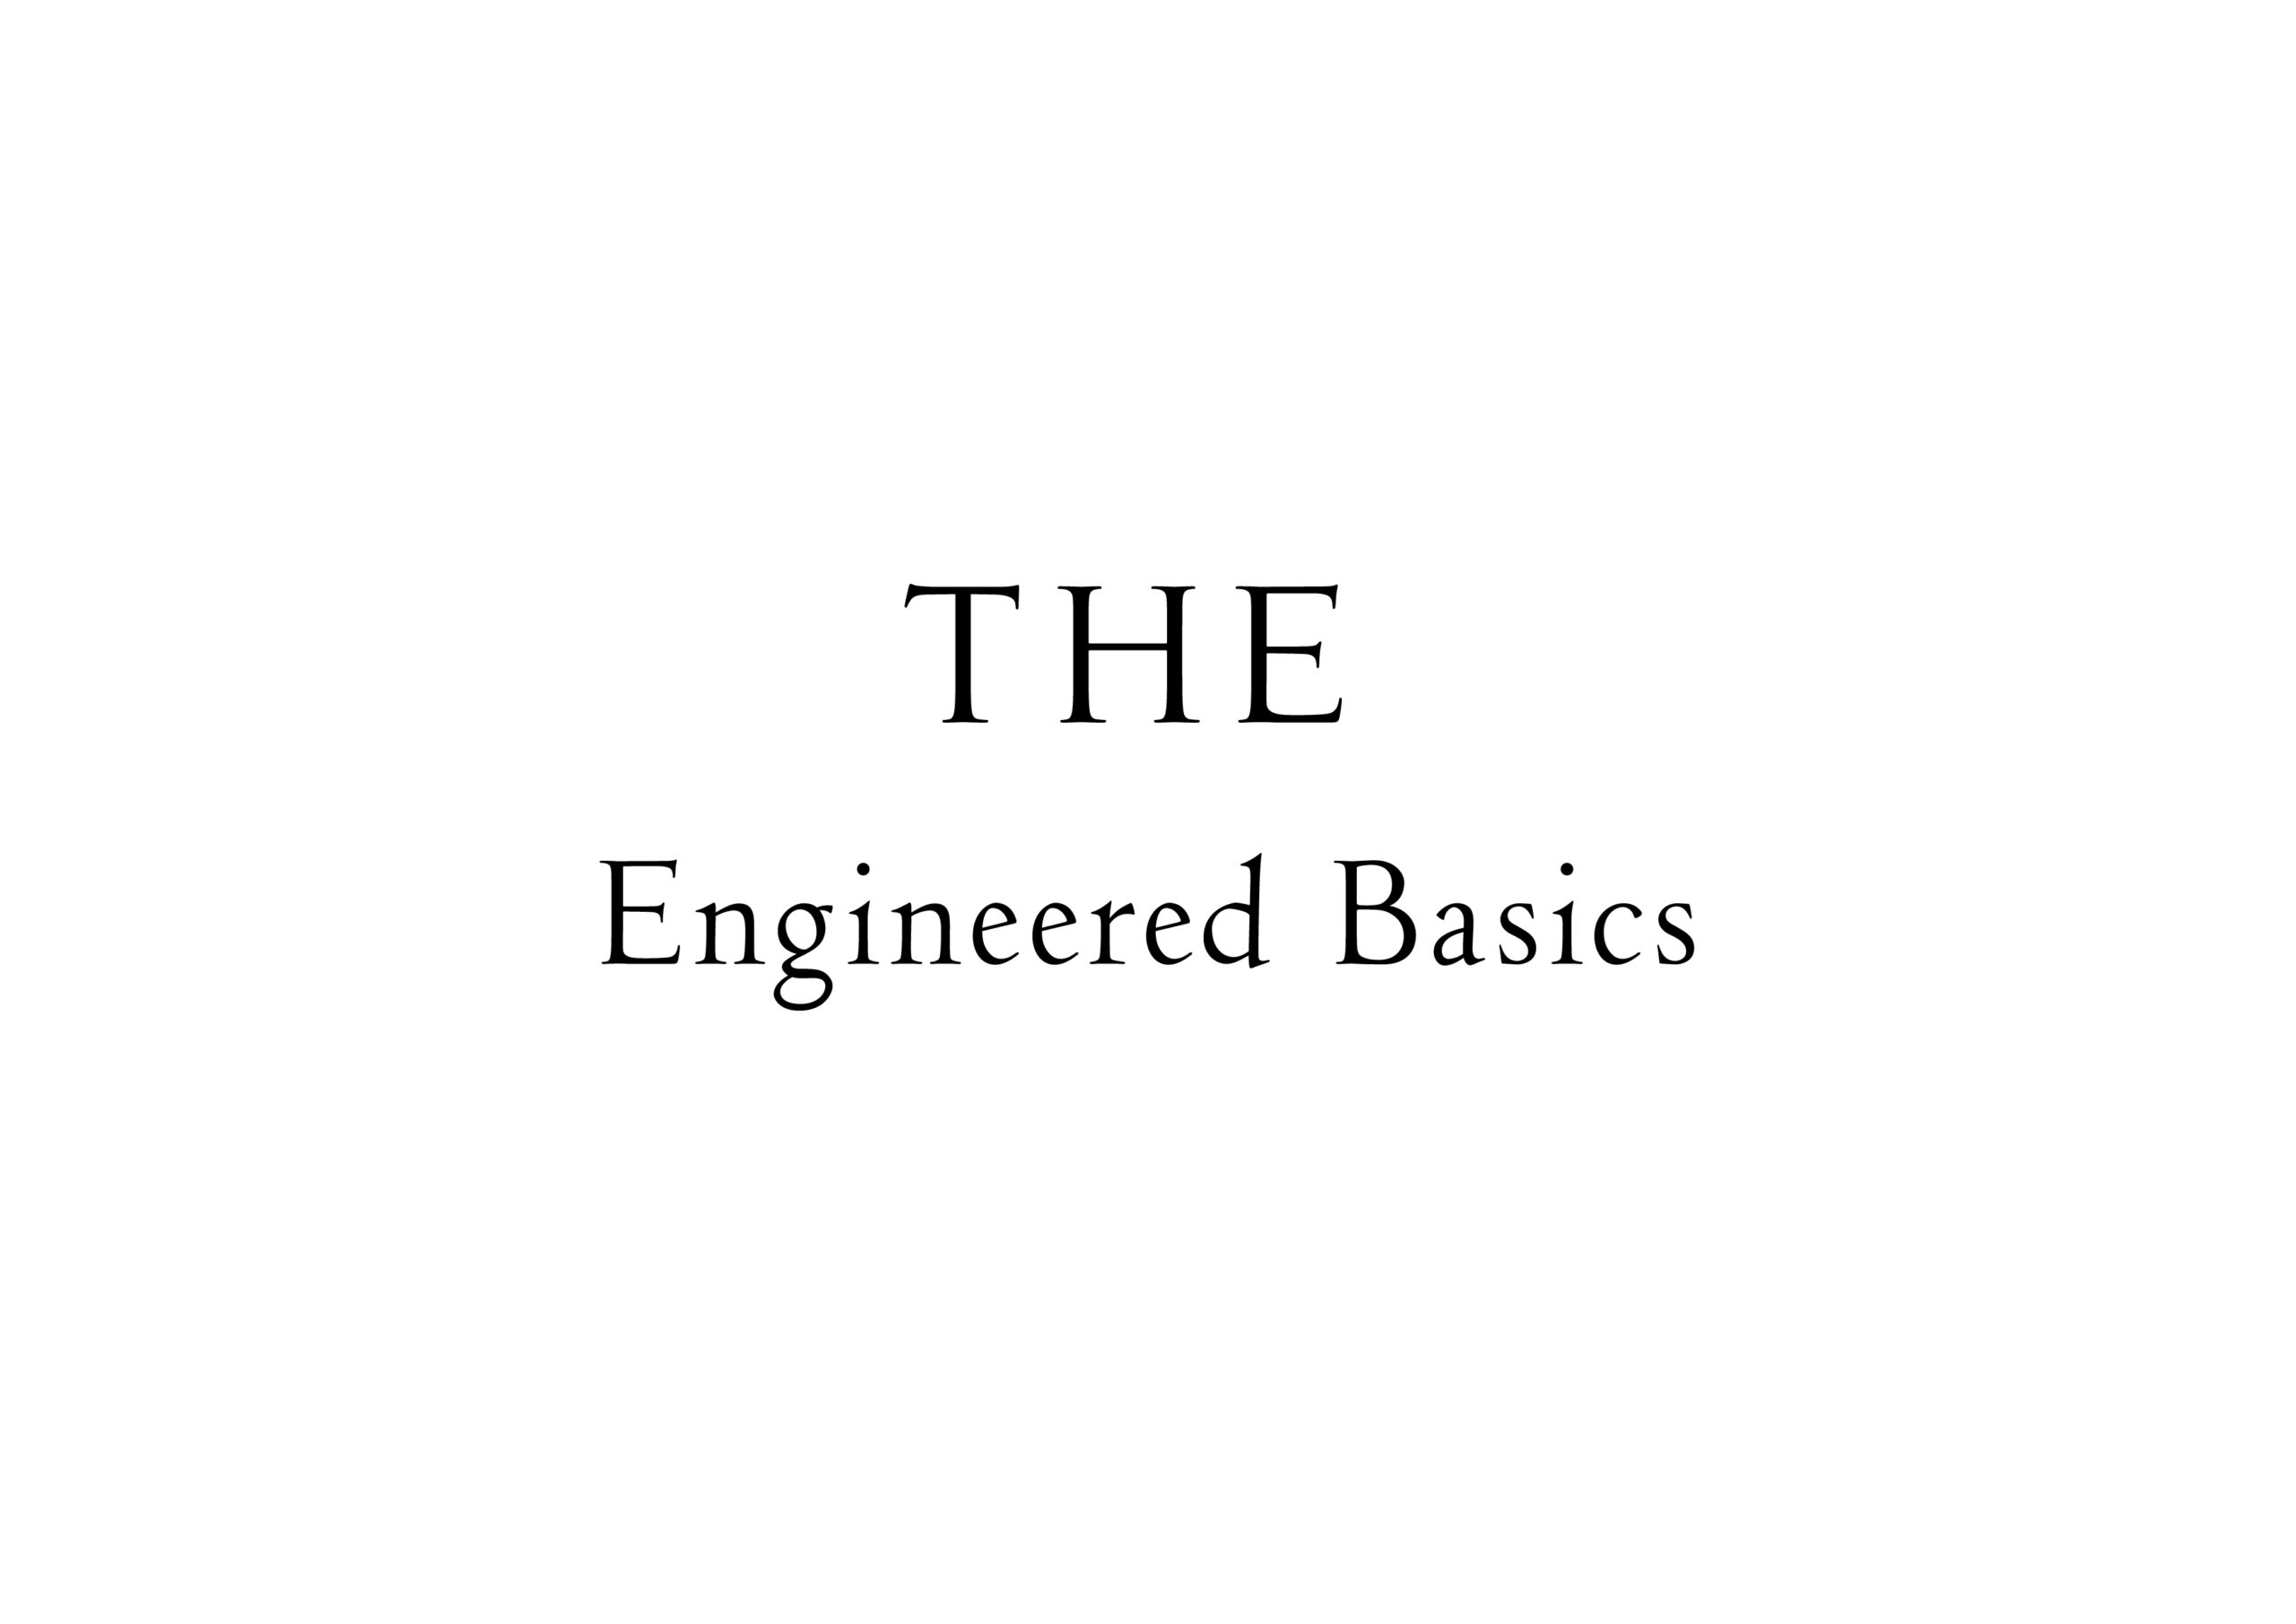 THE Engineered Basics